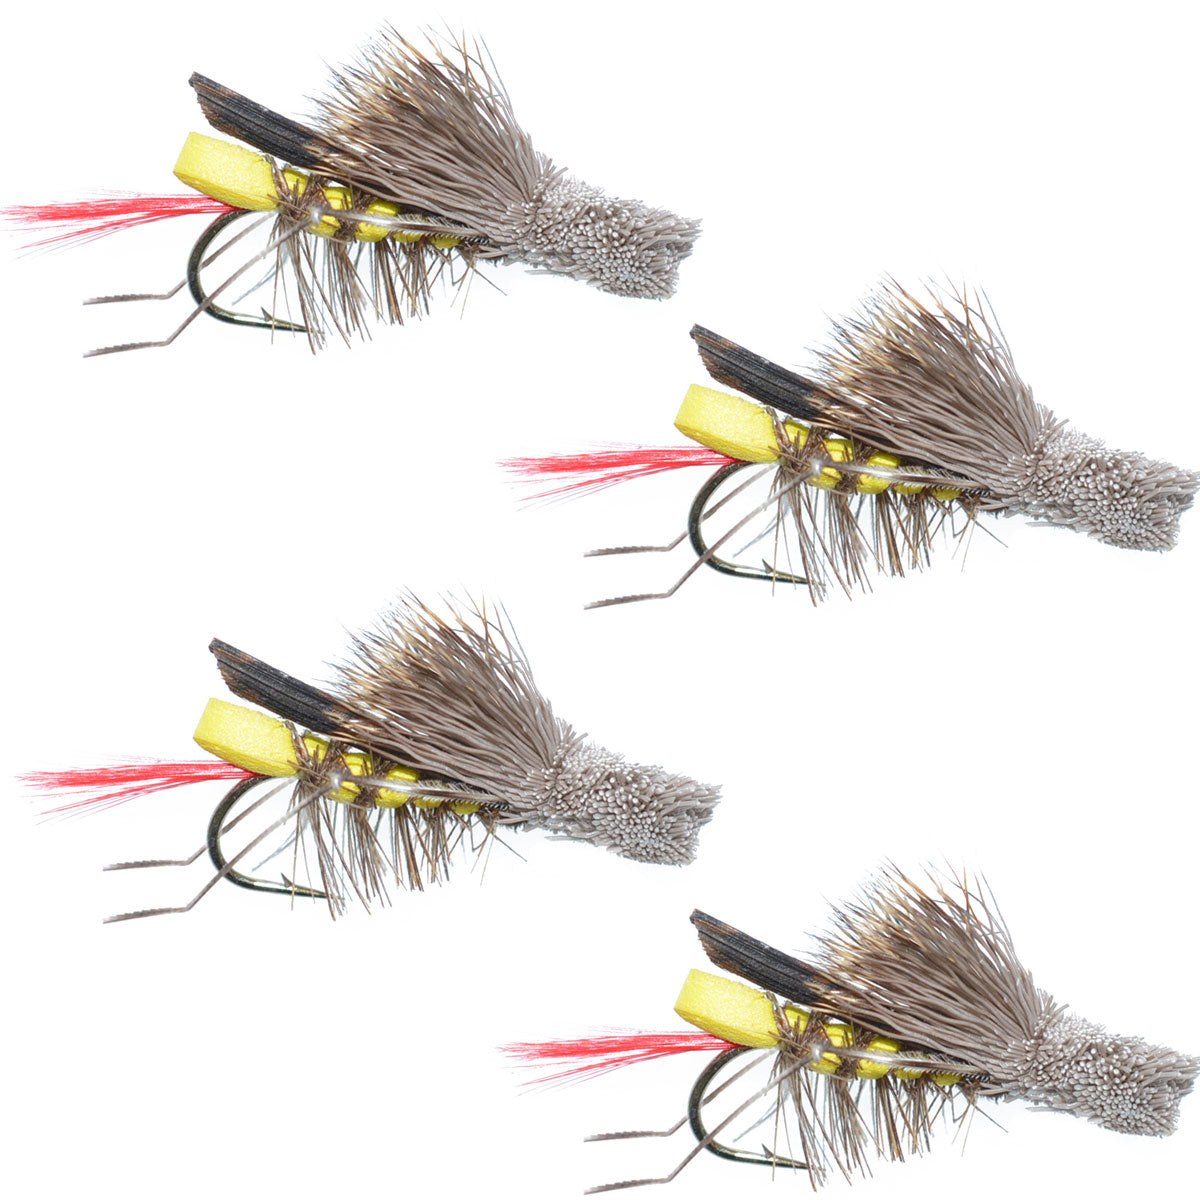 4 Pack Dave's Hopper Yellow Foam Body Grasshopper Fly - Hook Size 8